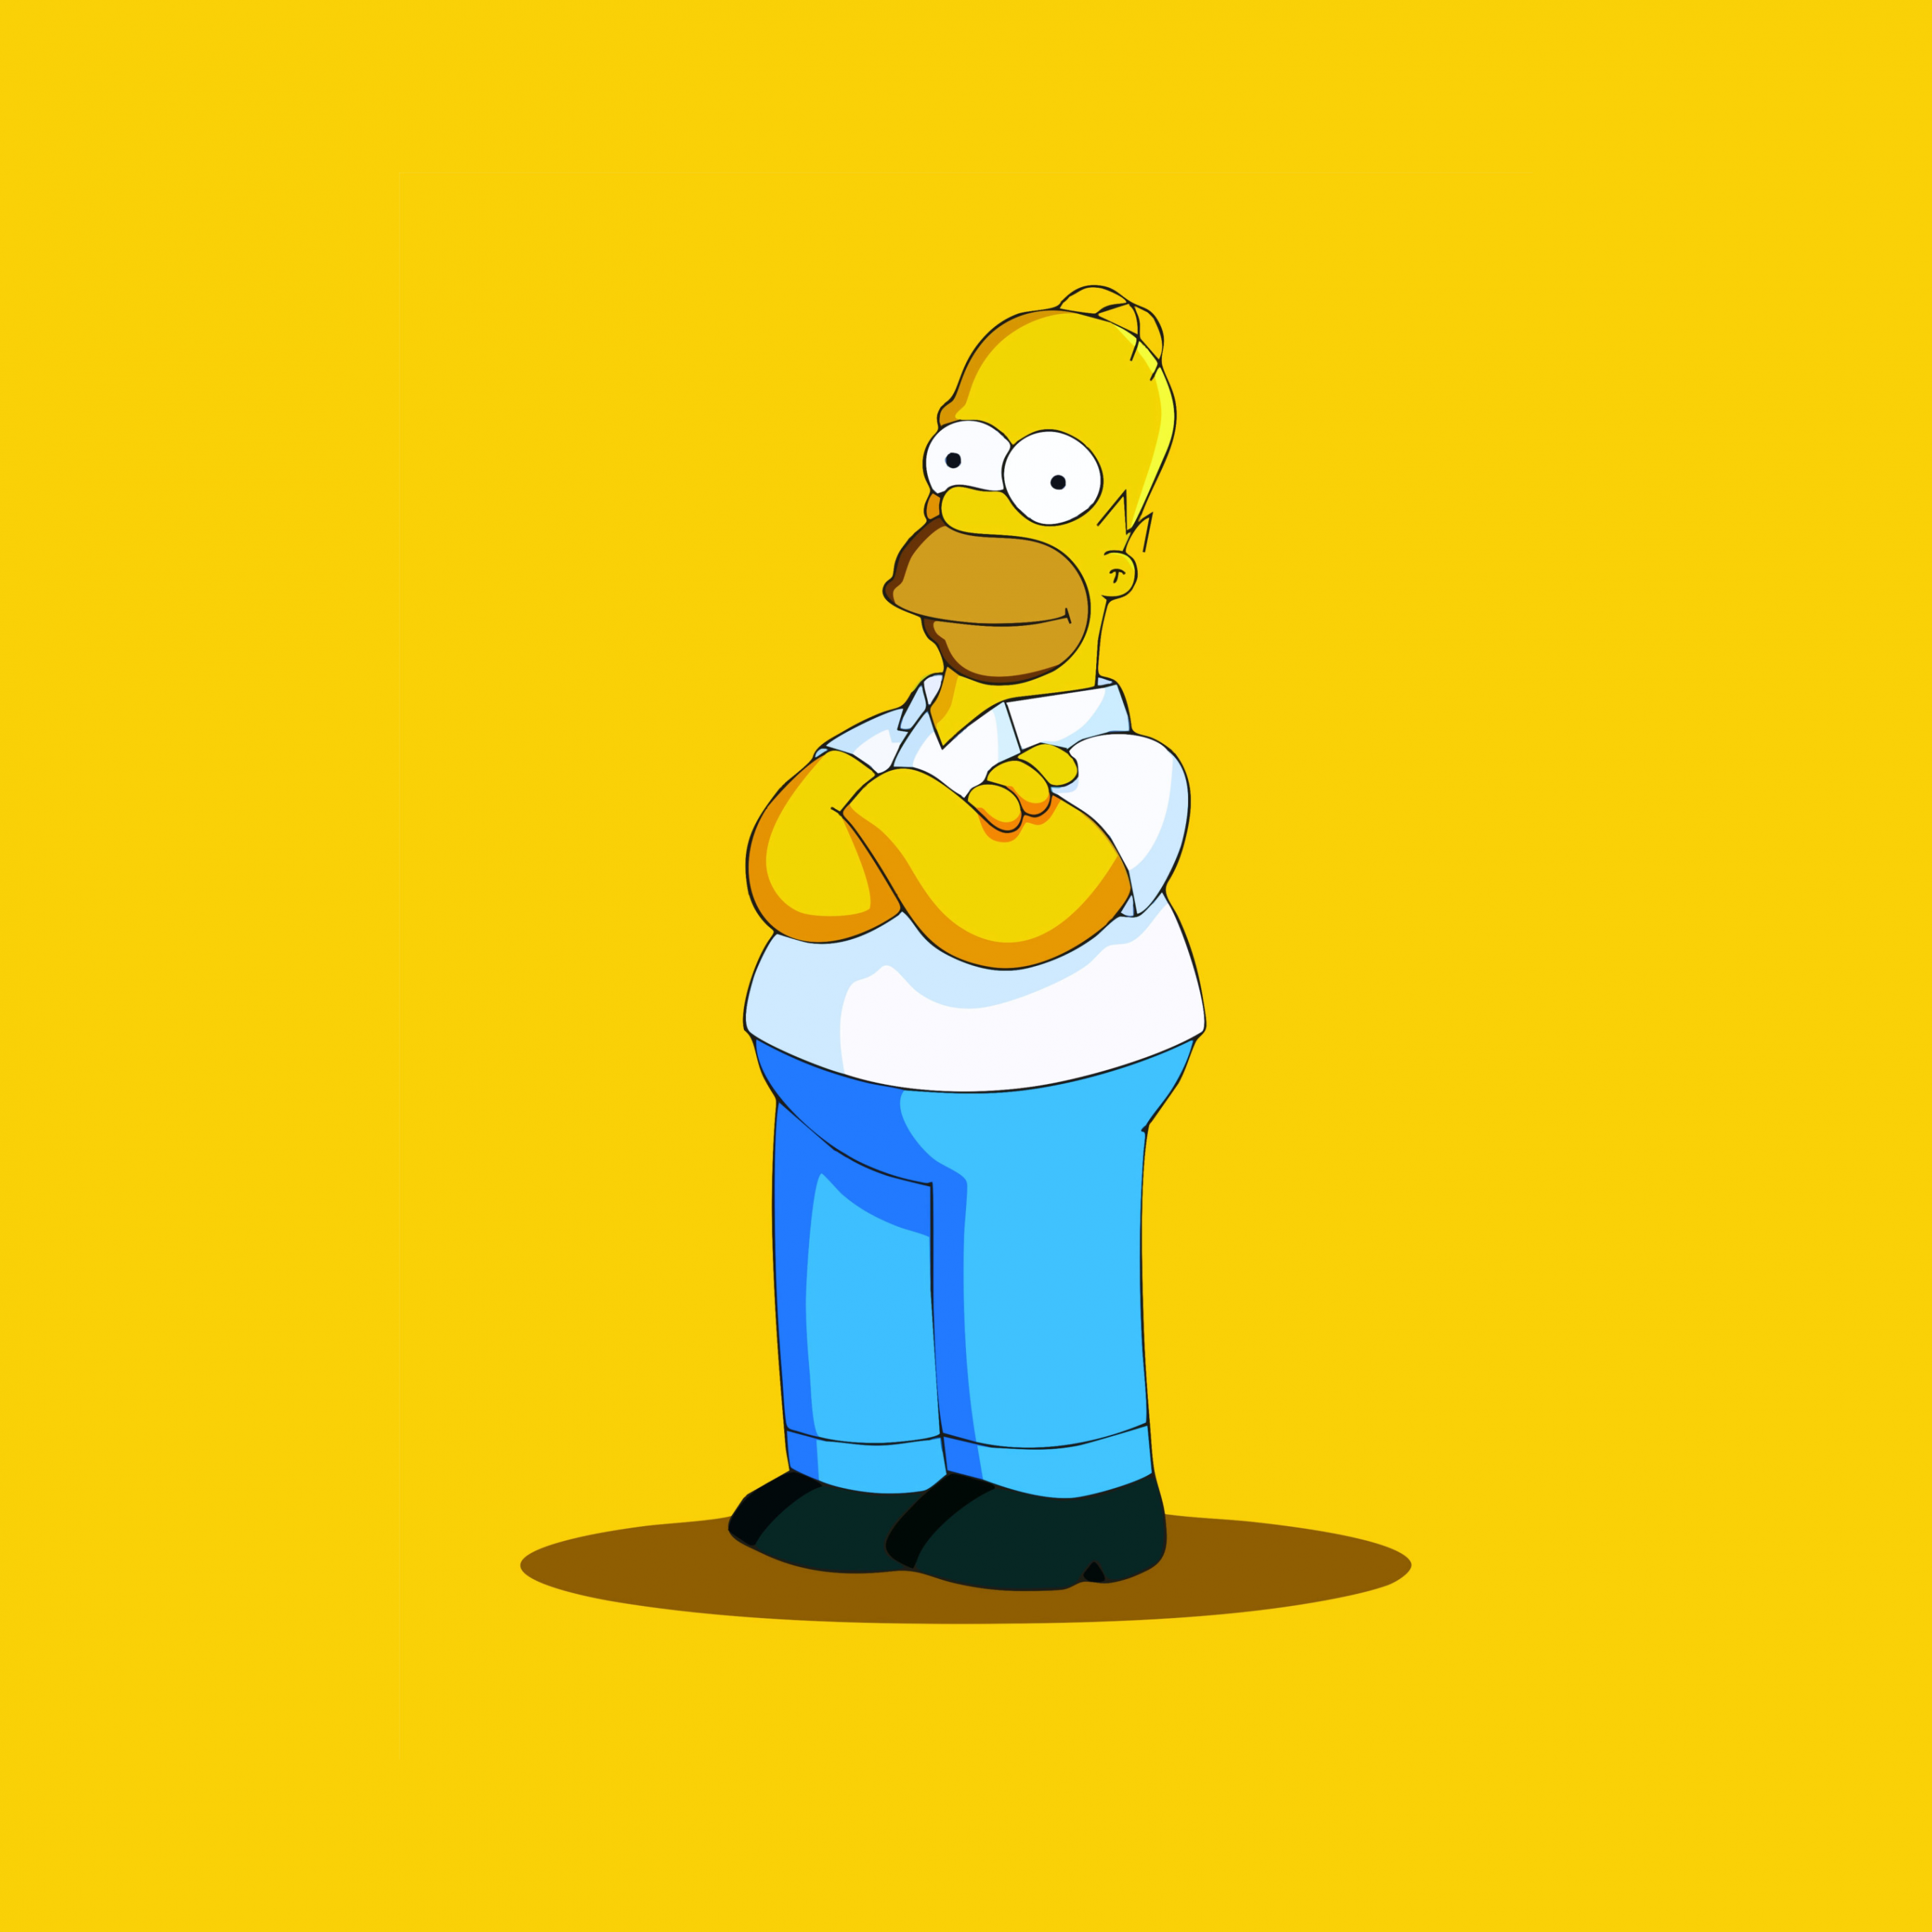 The simpsons cartoon Bart Simpson 4K wallpaper download